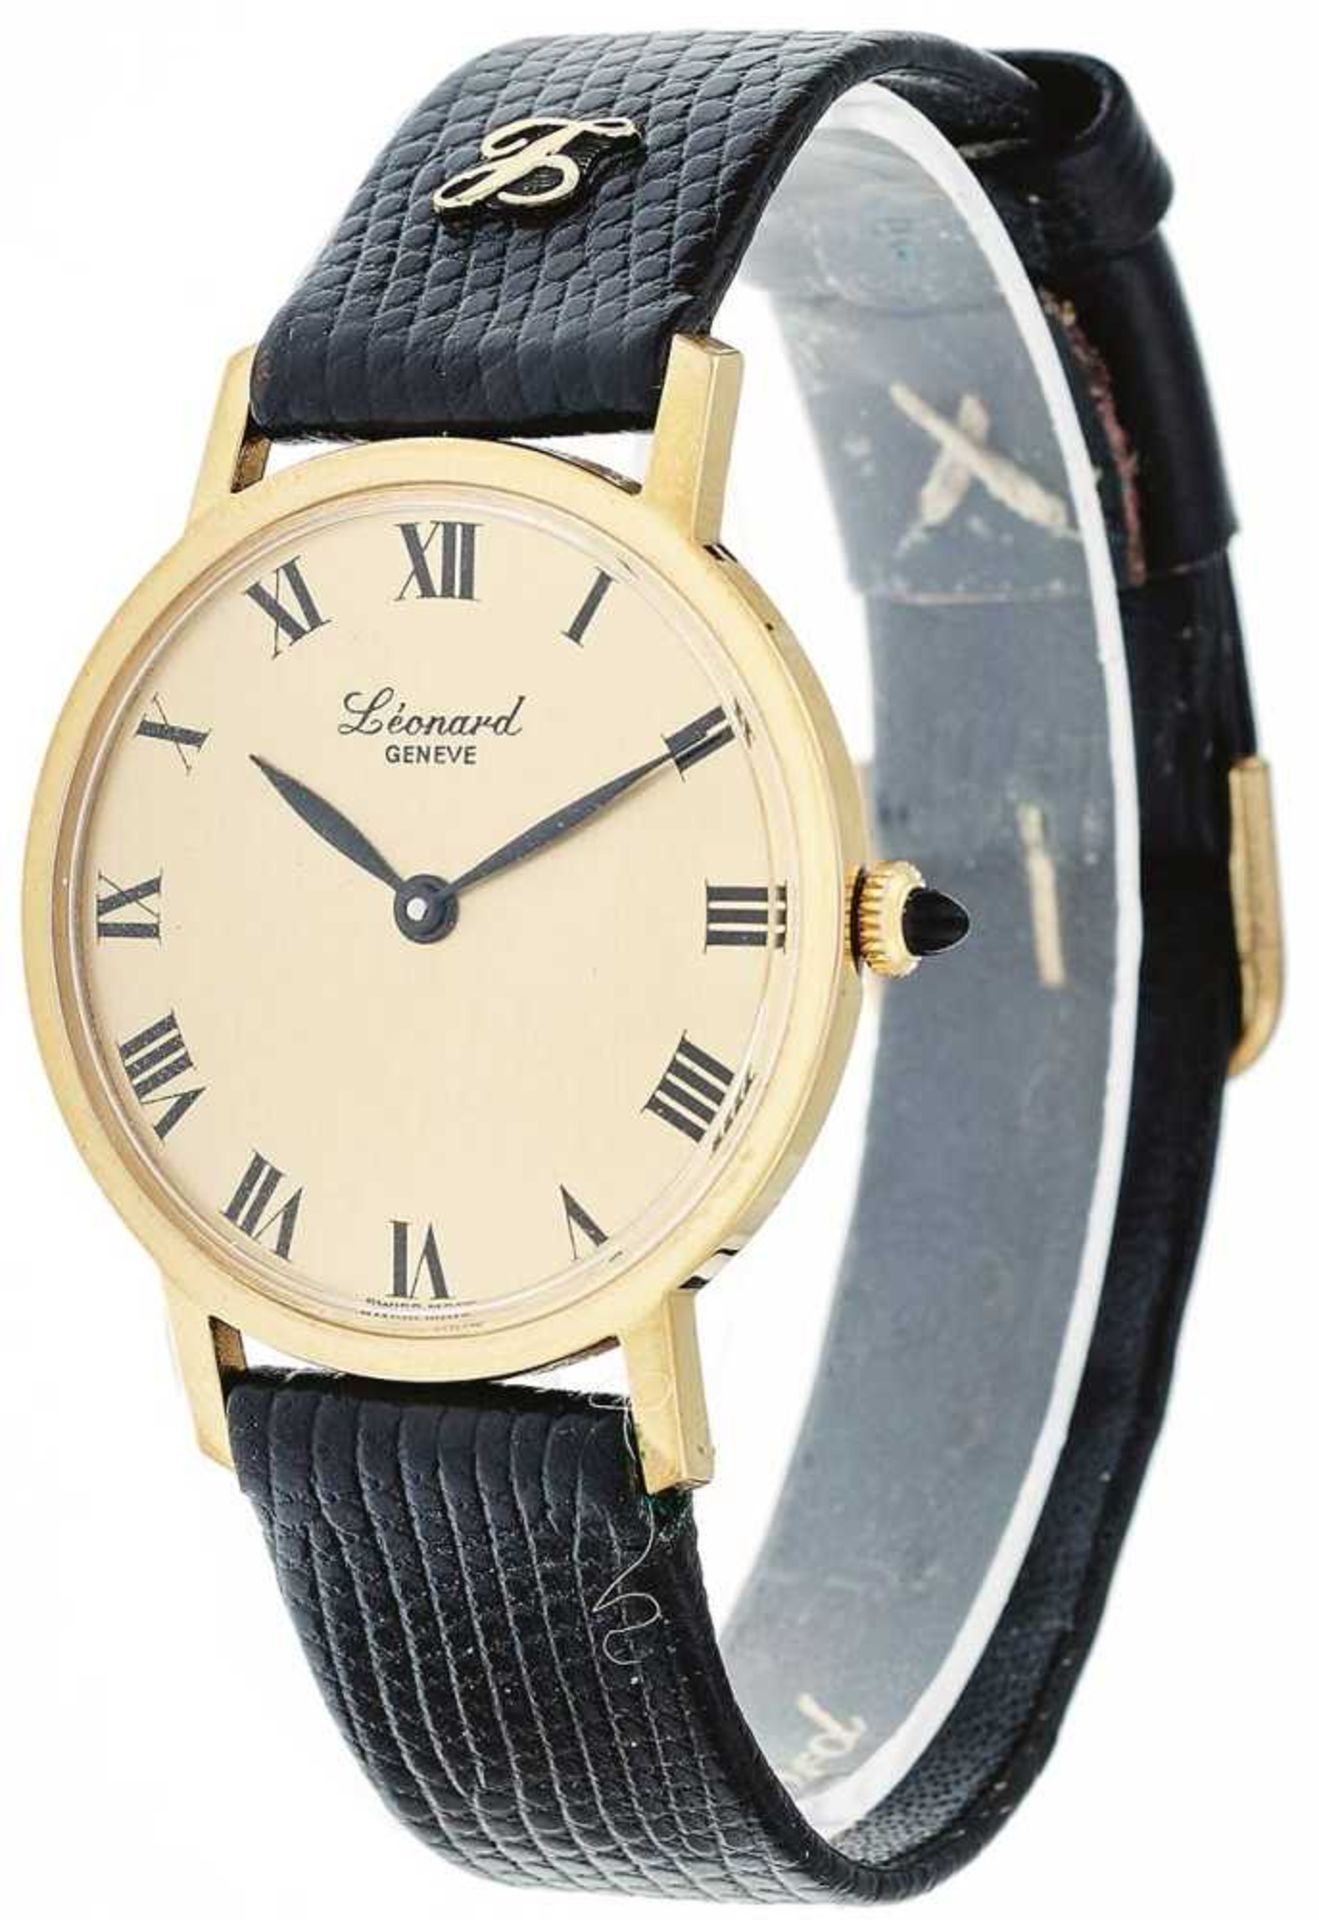 Leonard Geneve men's wristwatch. Ca. 35 mm, Switzerland, case Gold rolled gold with stainless steel